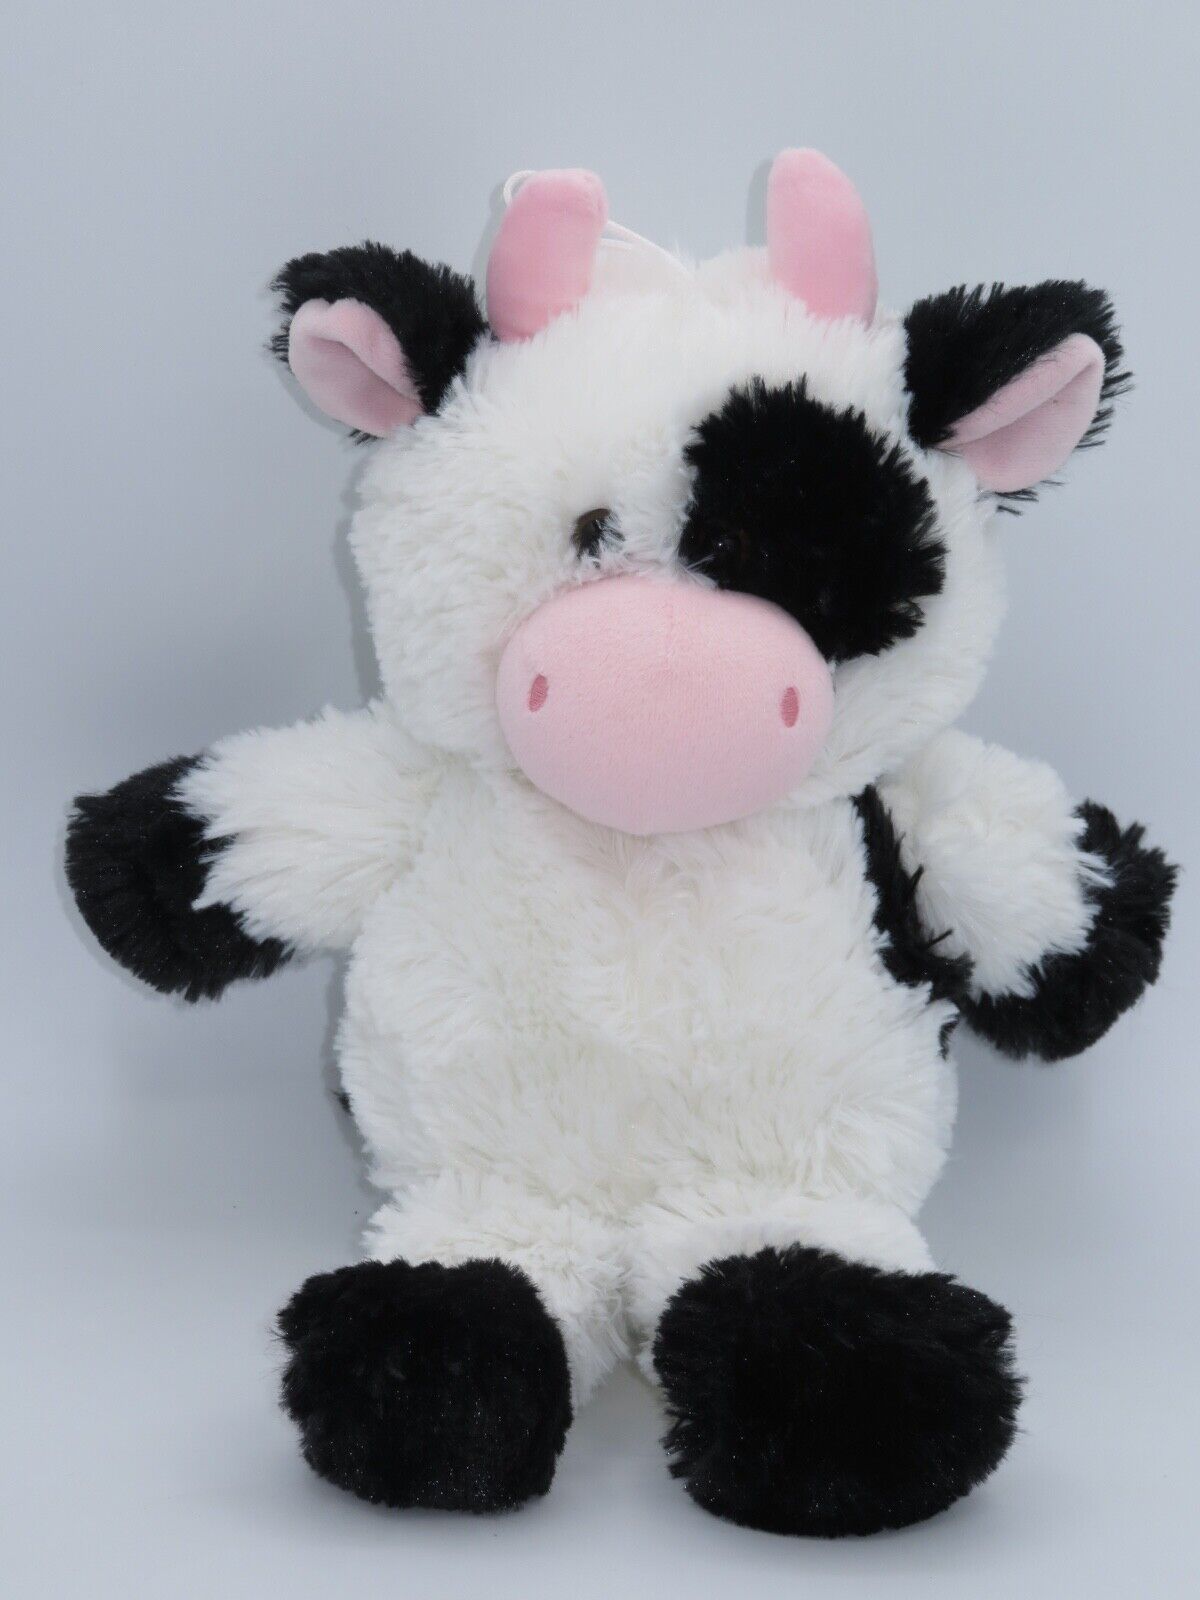 Hershey 12” Spotted Cow Plush Stuffed Animal Hershey’s Chocolate Cow Toy